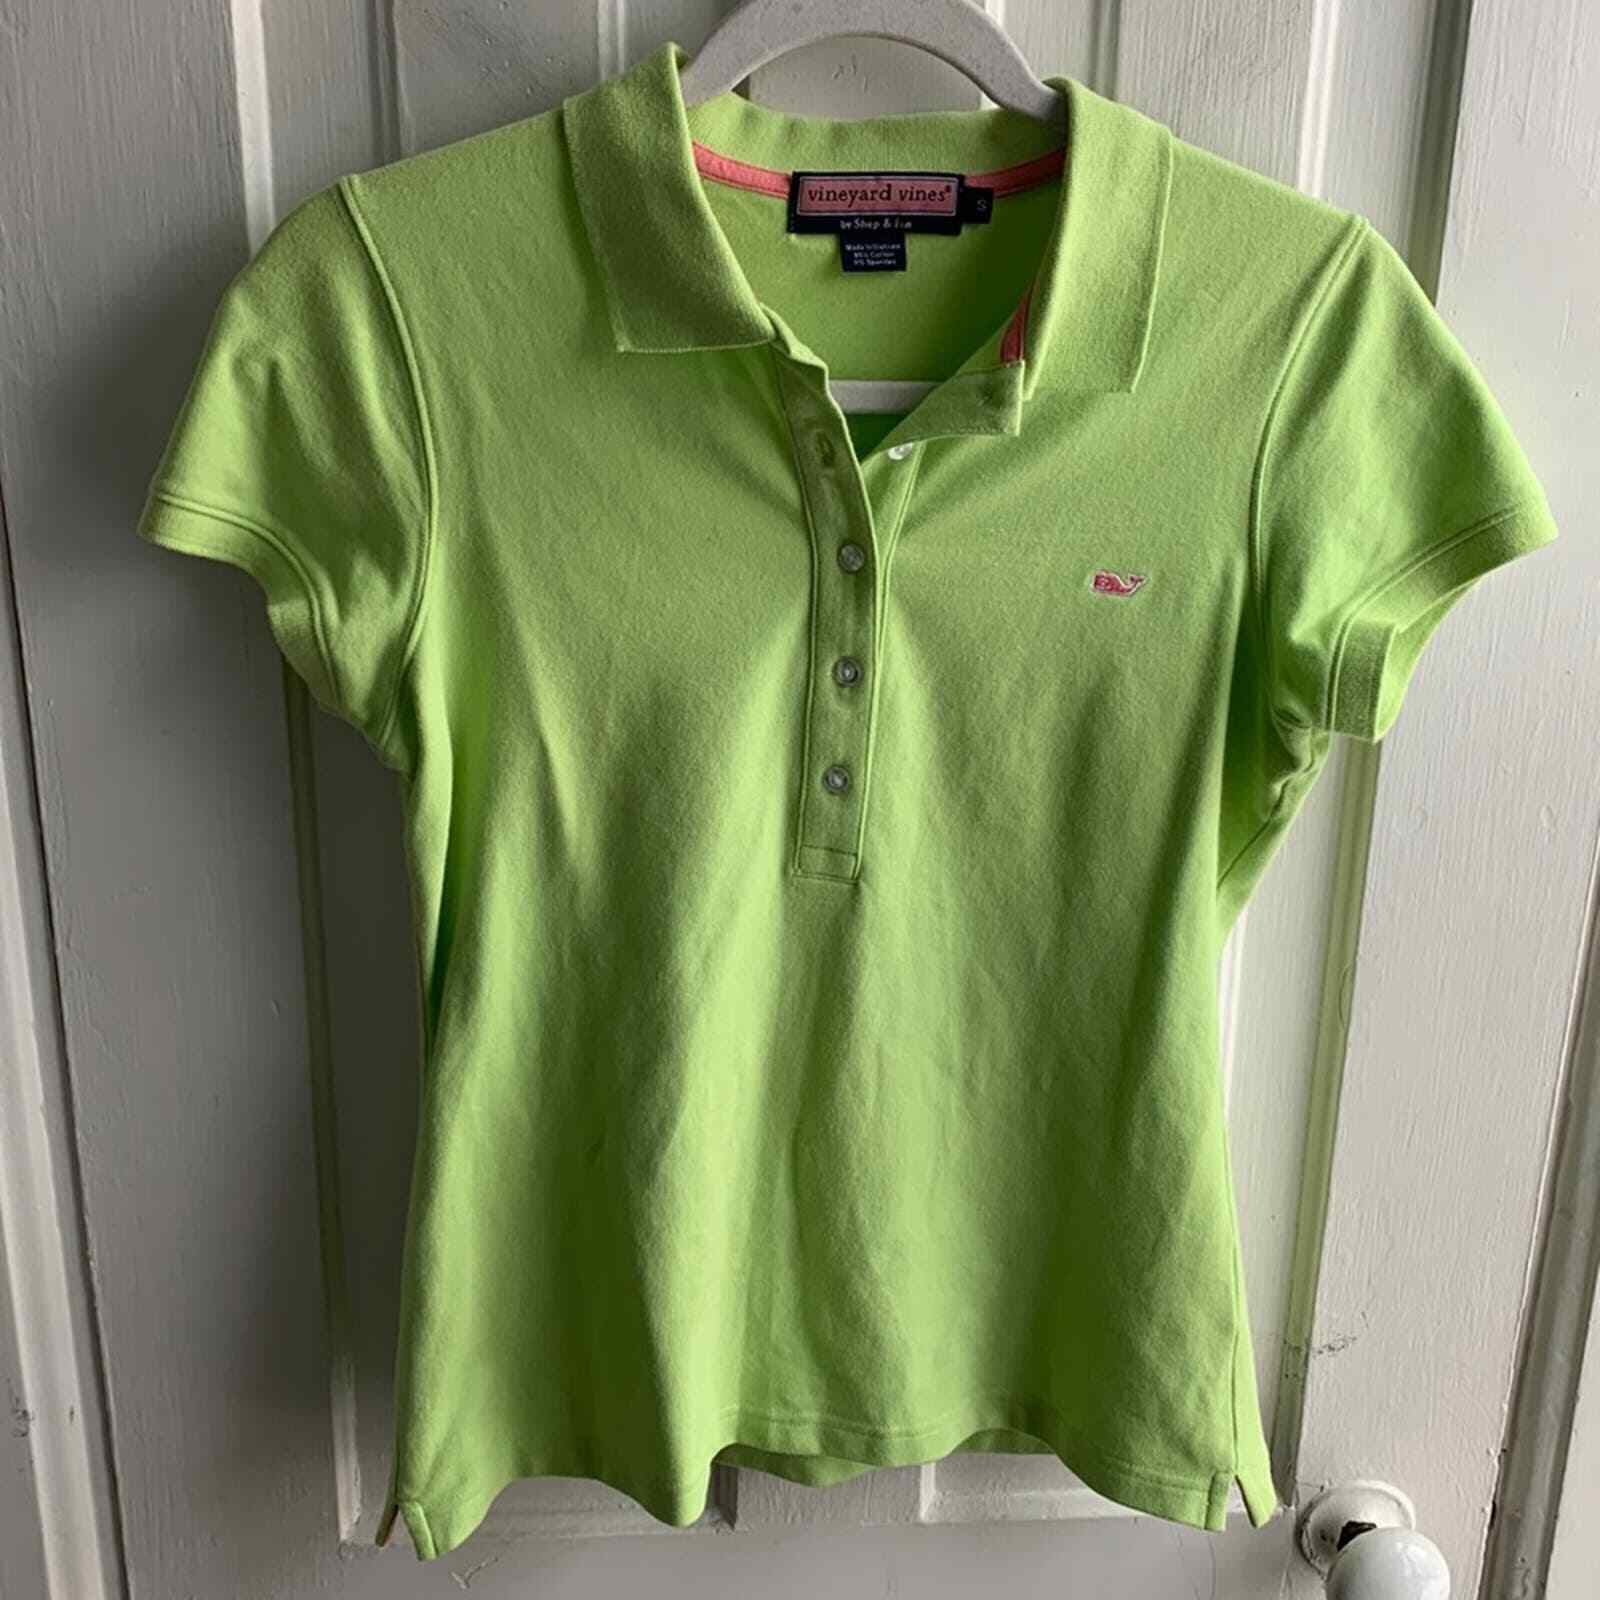 Vineyard Vines Lime Green Polo Shirt - image 1